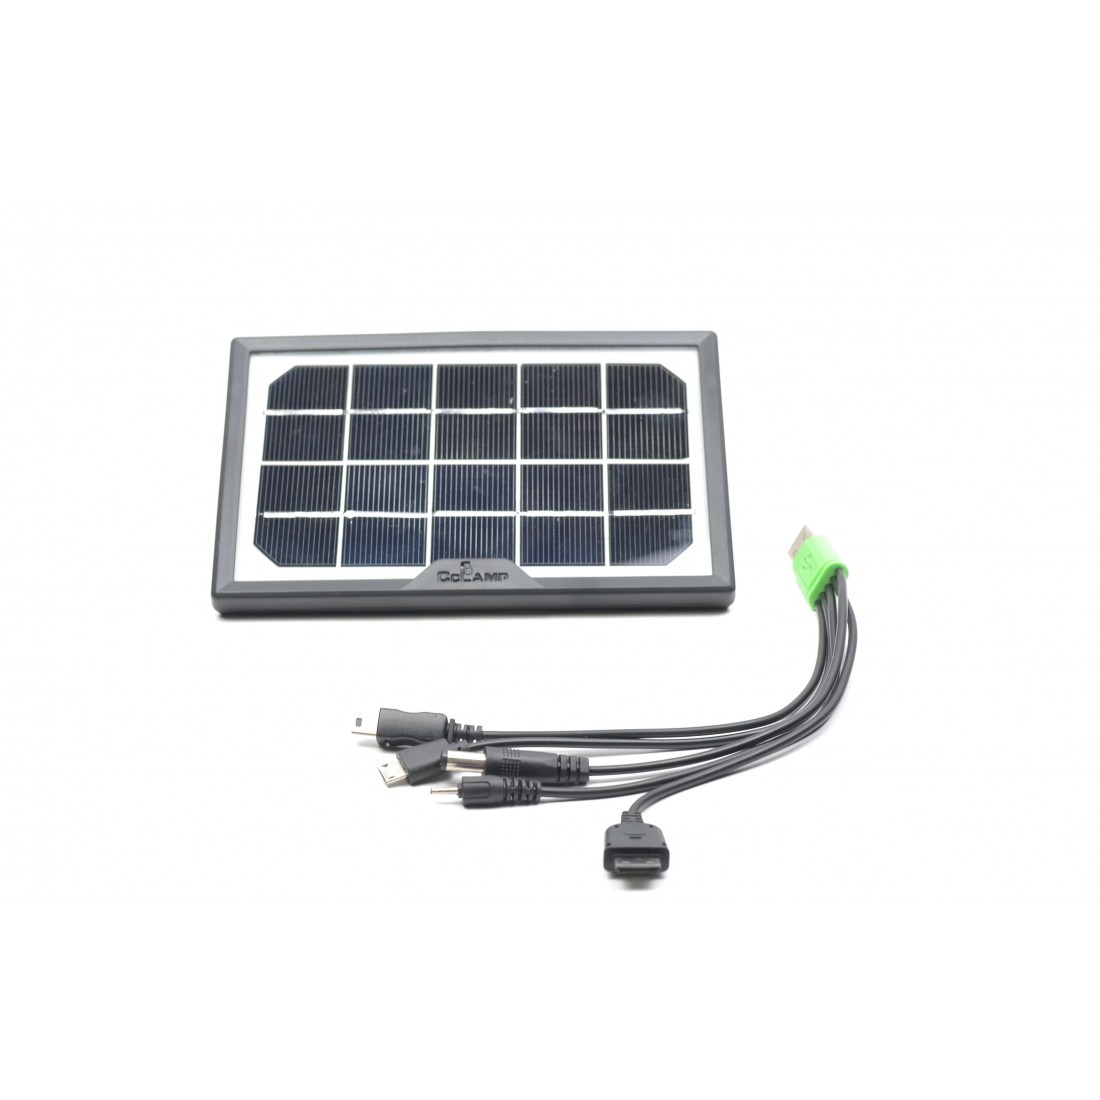 Panou solar portabil de 5v, putere 1.8w cu intrare usb - cl518wp